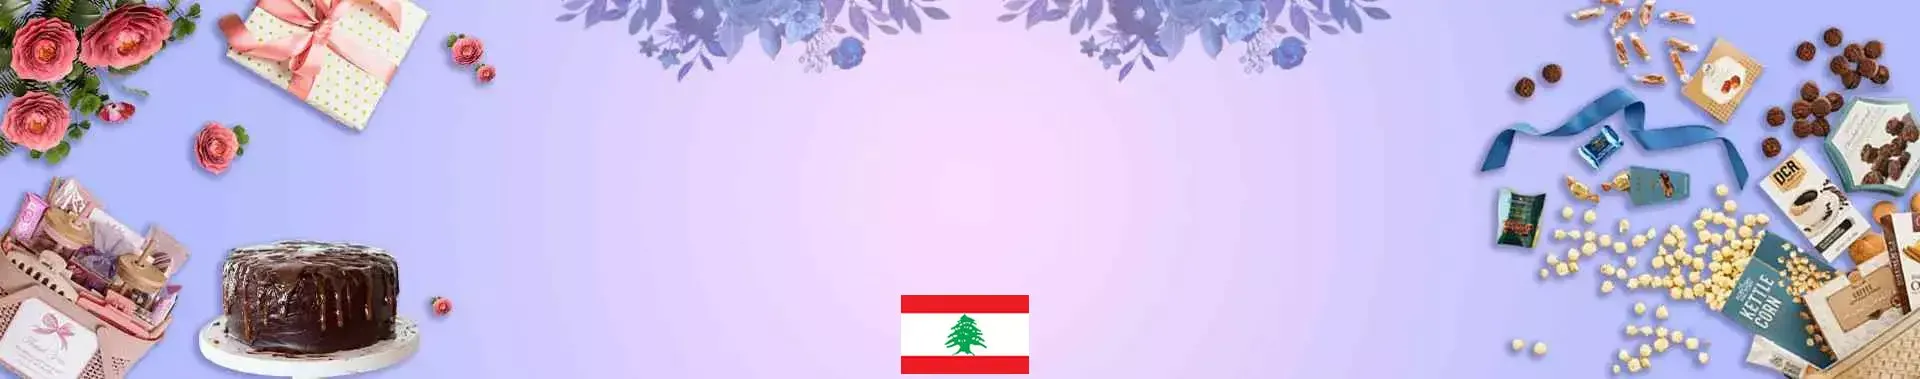 Send Gifts to Lebanon, Gift Baskets to Lebanon, Hampers to Lebanon, Hampers & Gifts delivery in Lebanon Online